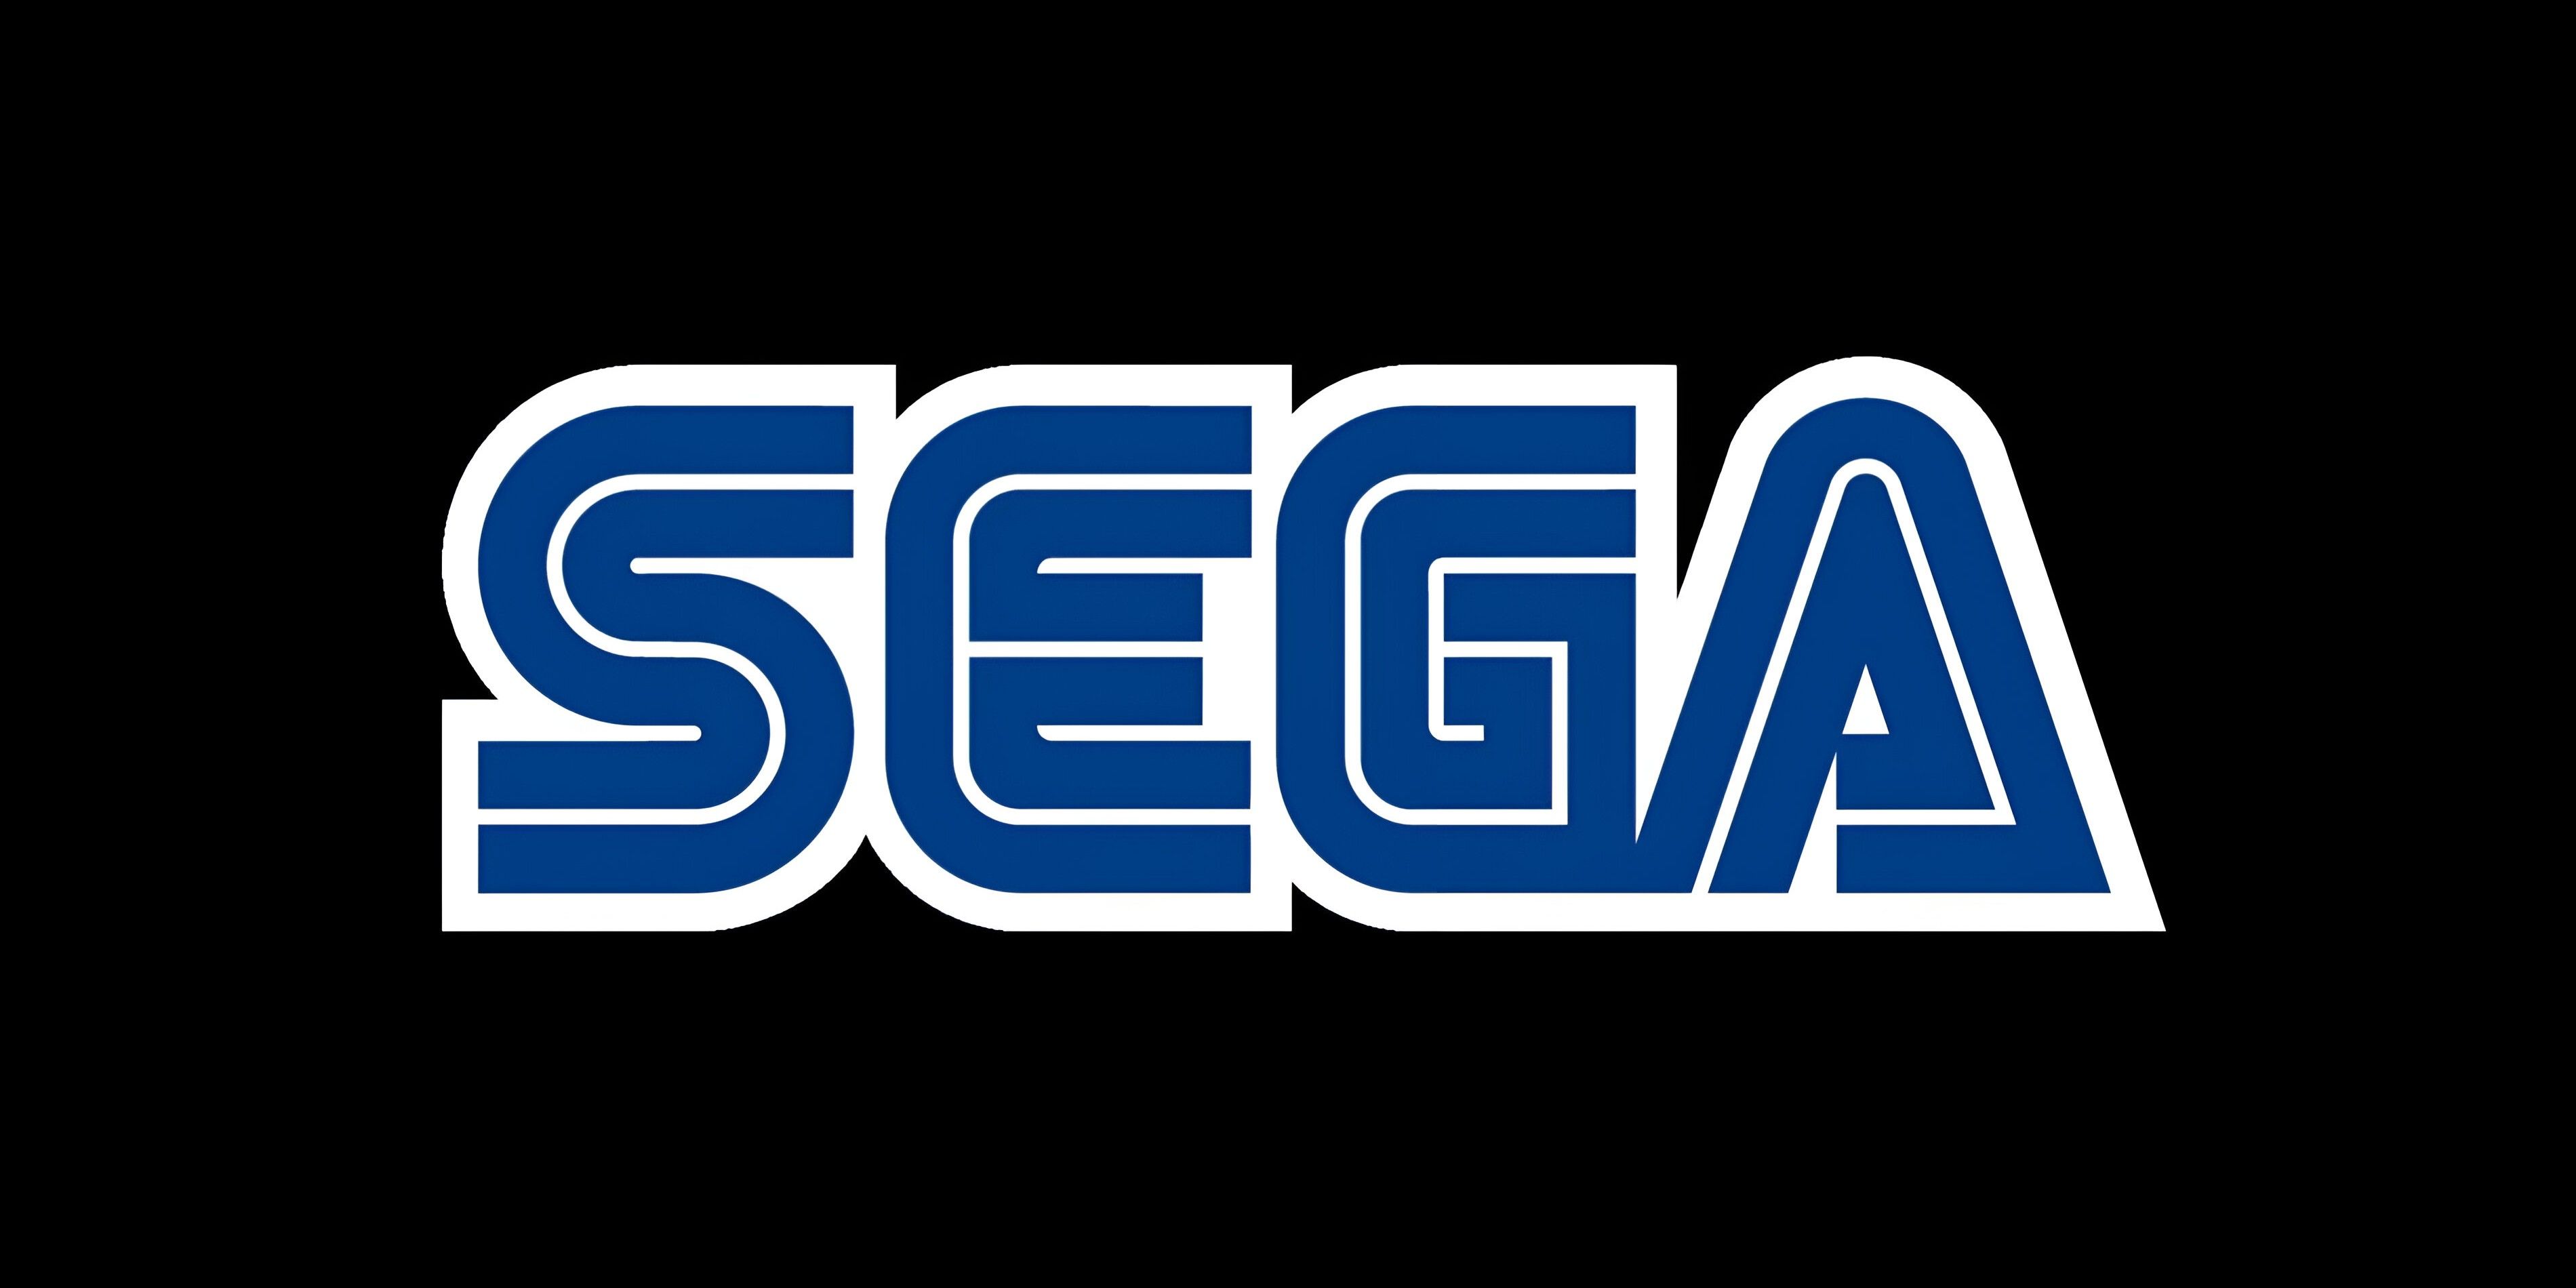 Sega takes legal action against social media users